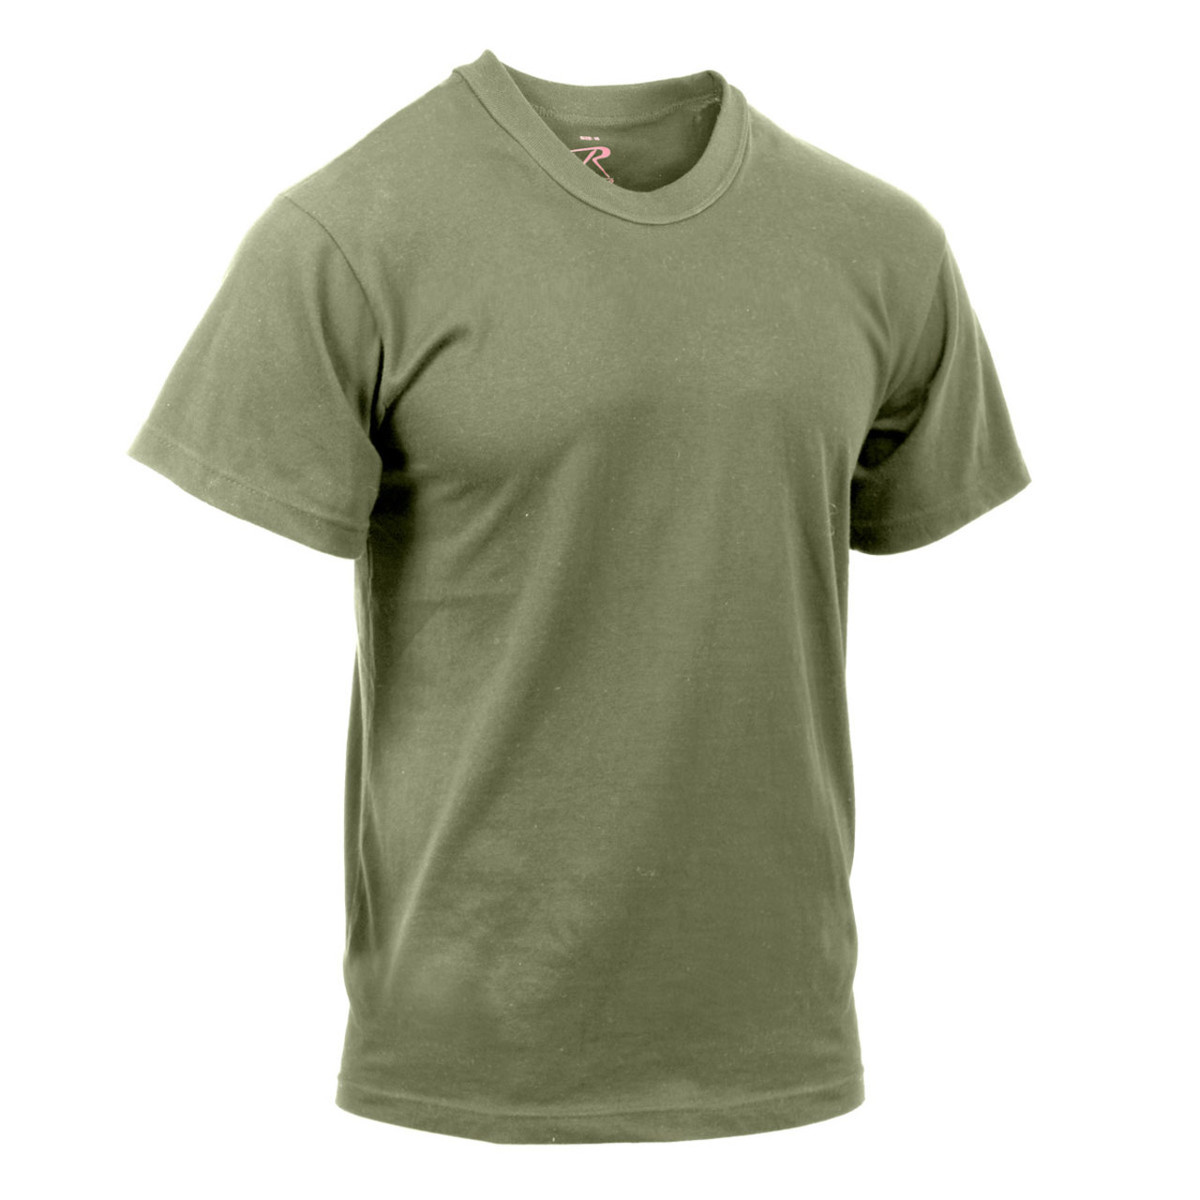 Rothco Men's Moisture Wicking T-Shirt Buy Now